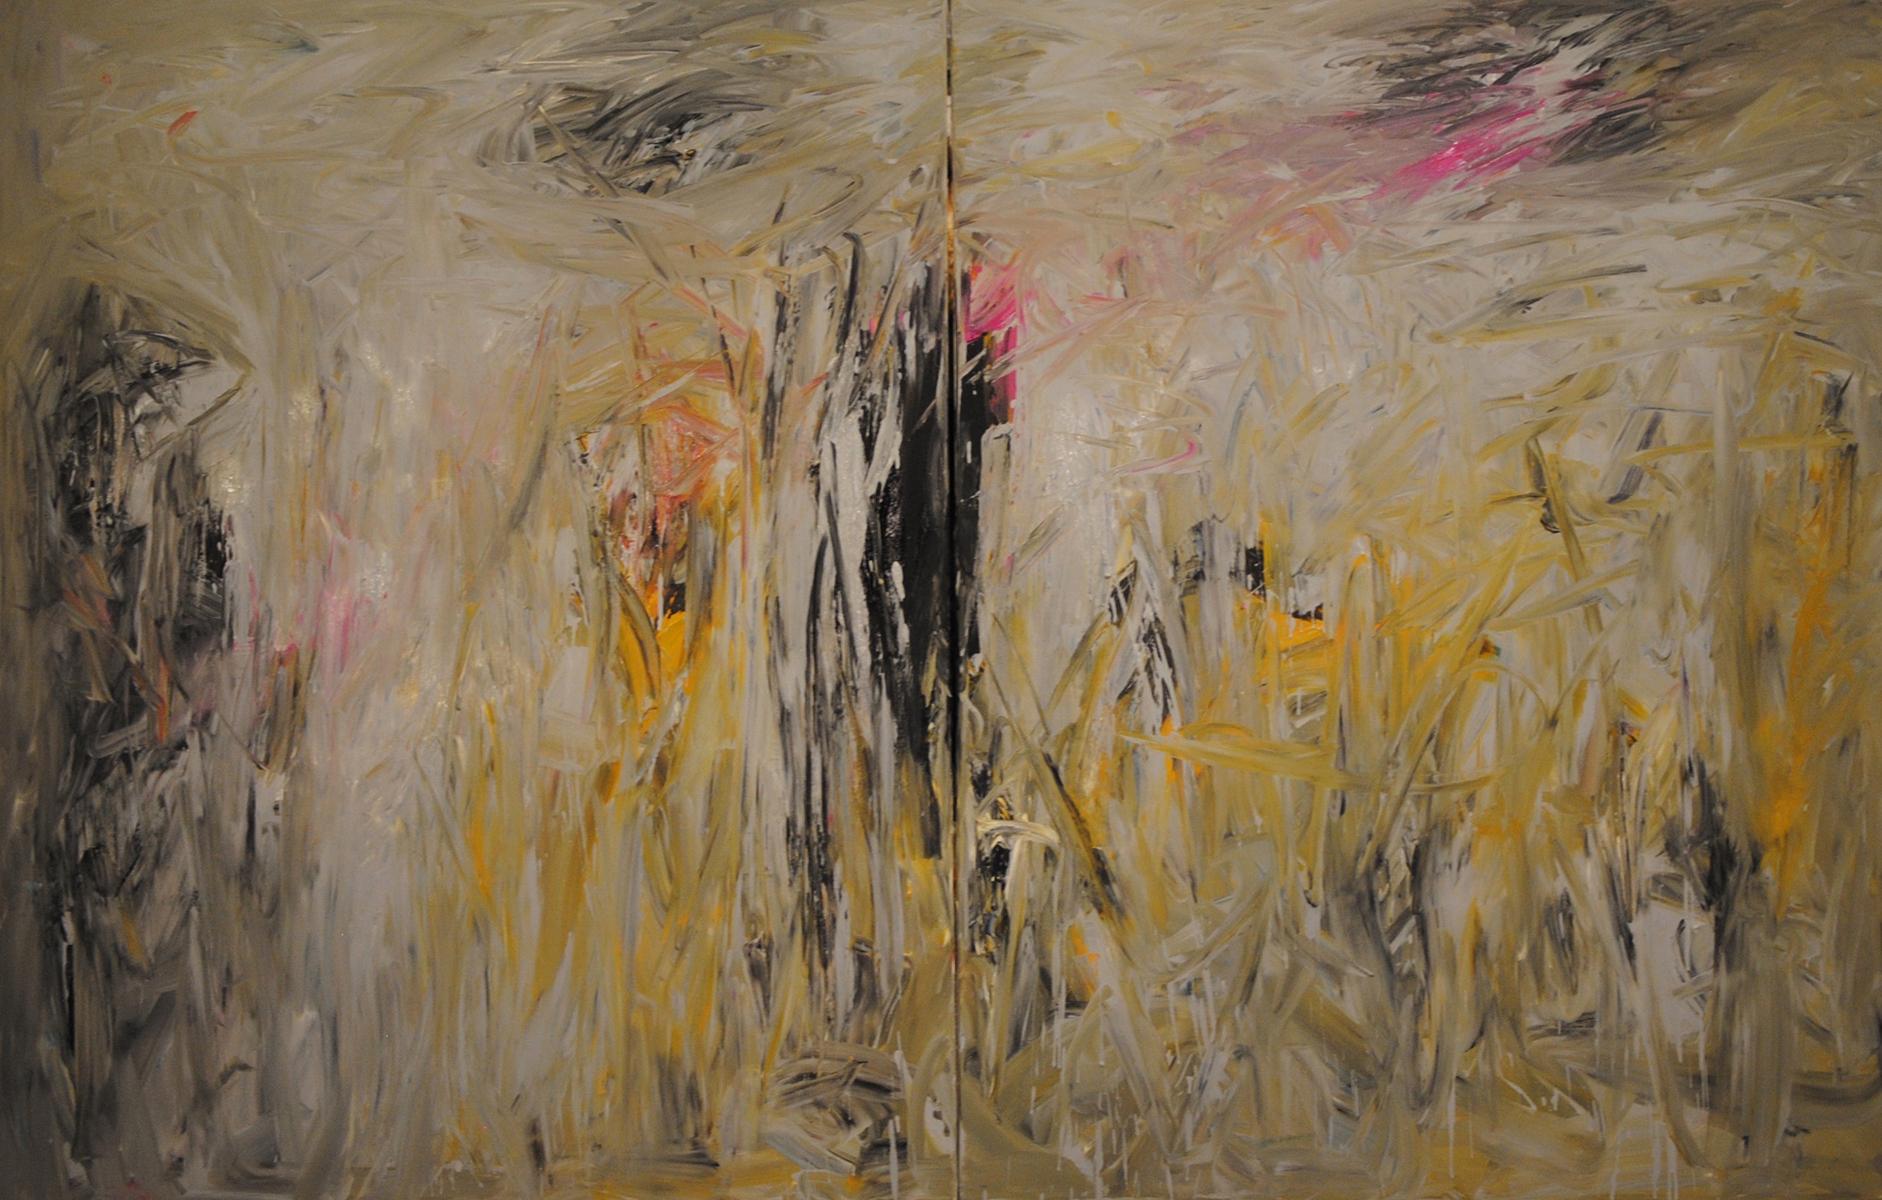 Md Tokon - Freedom, Painting 2015